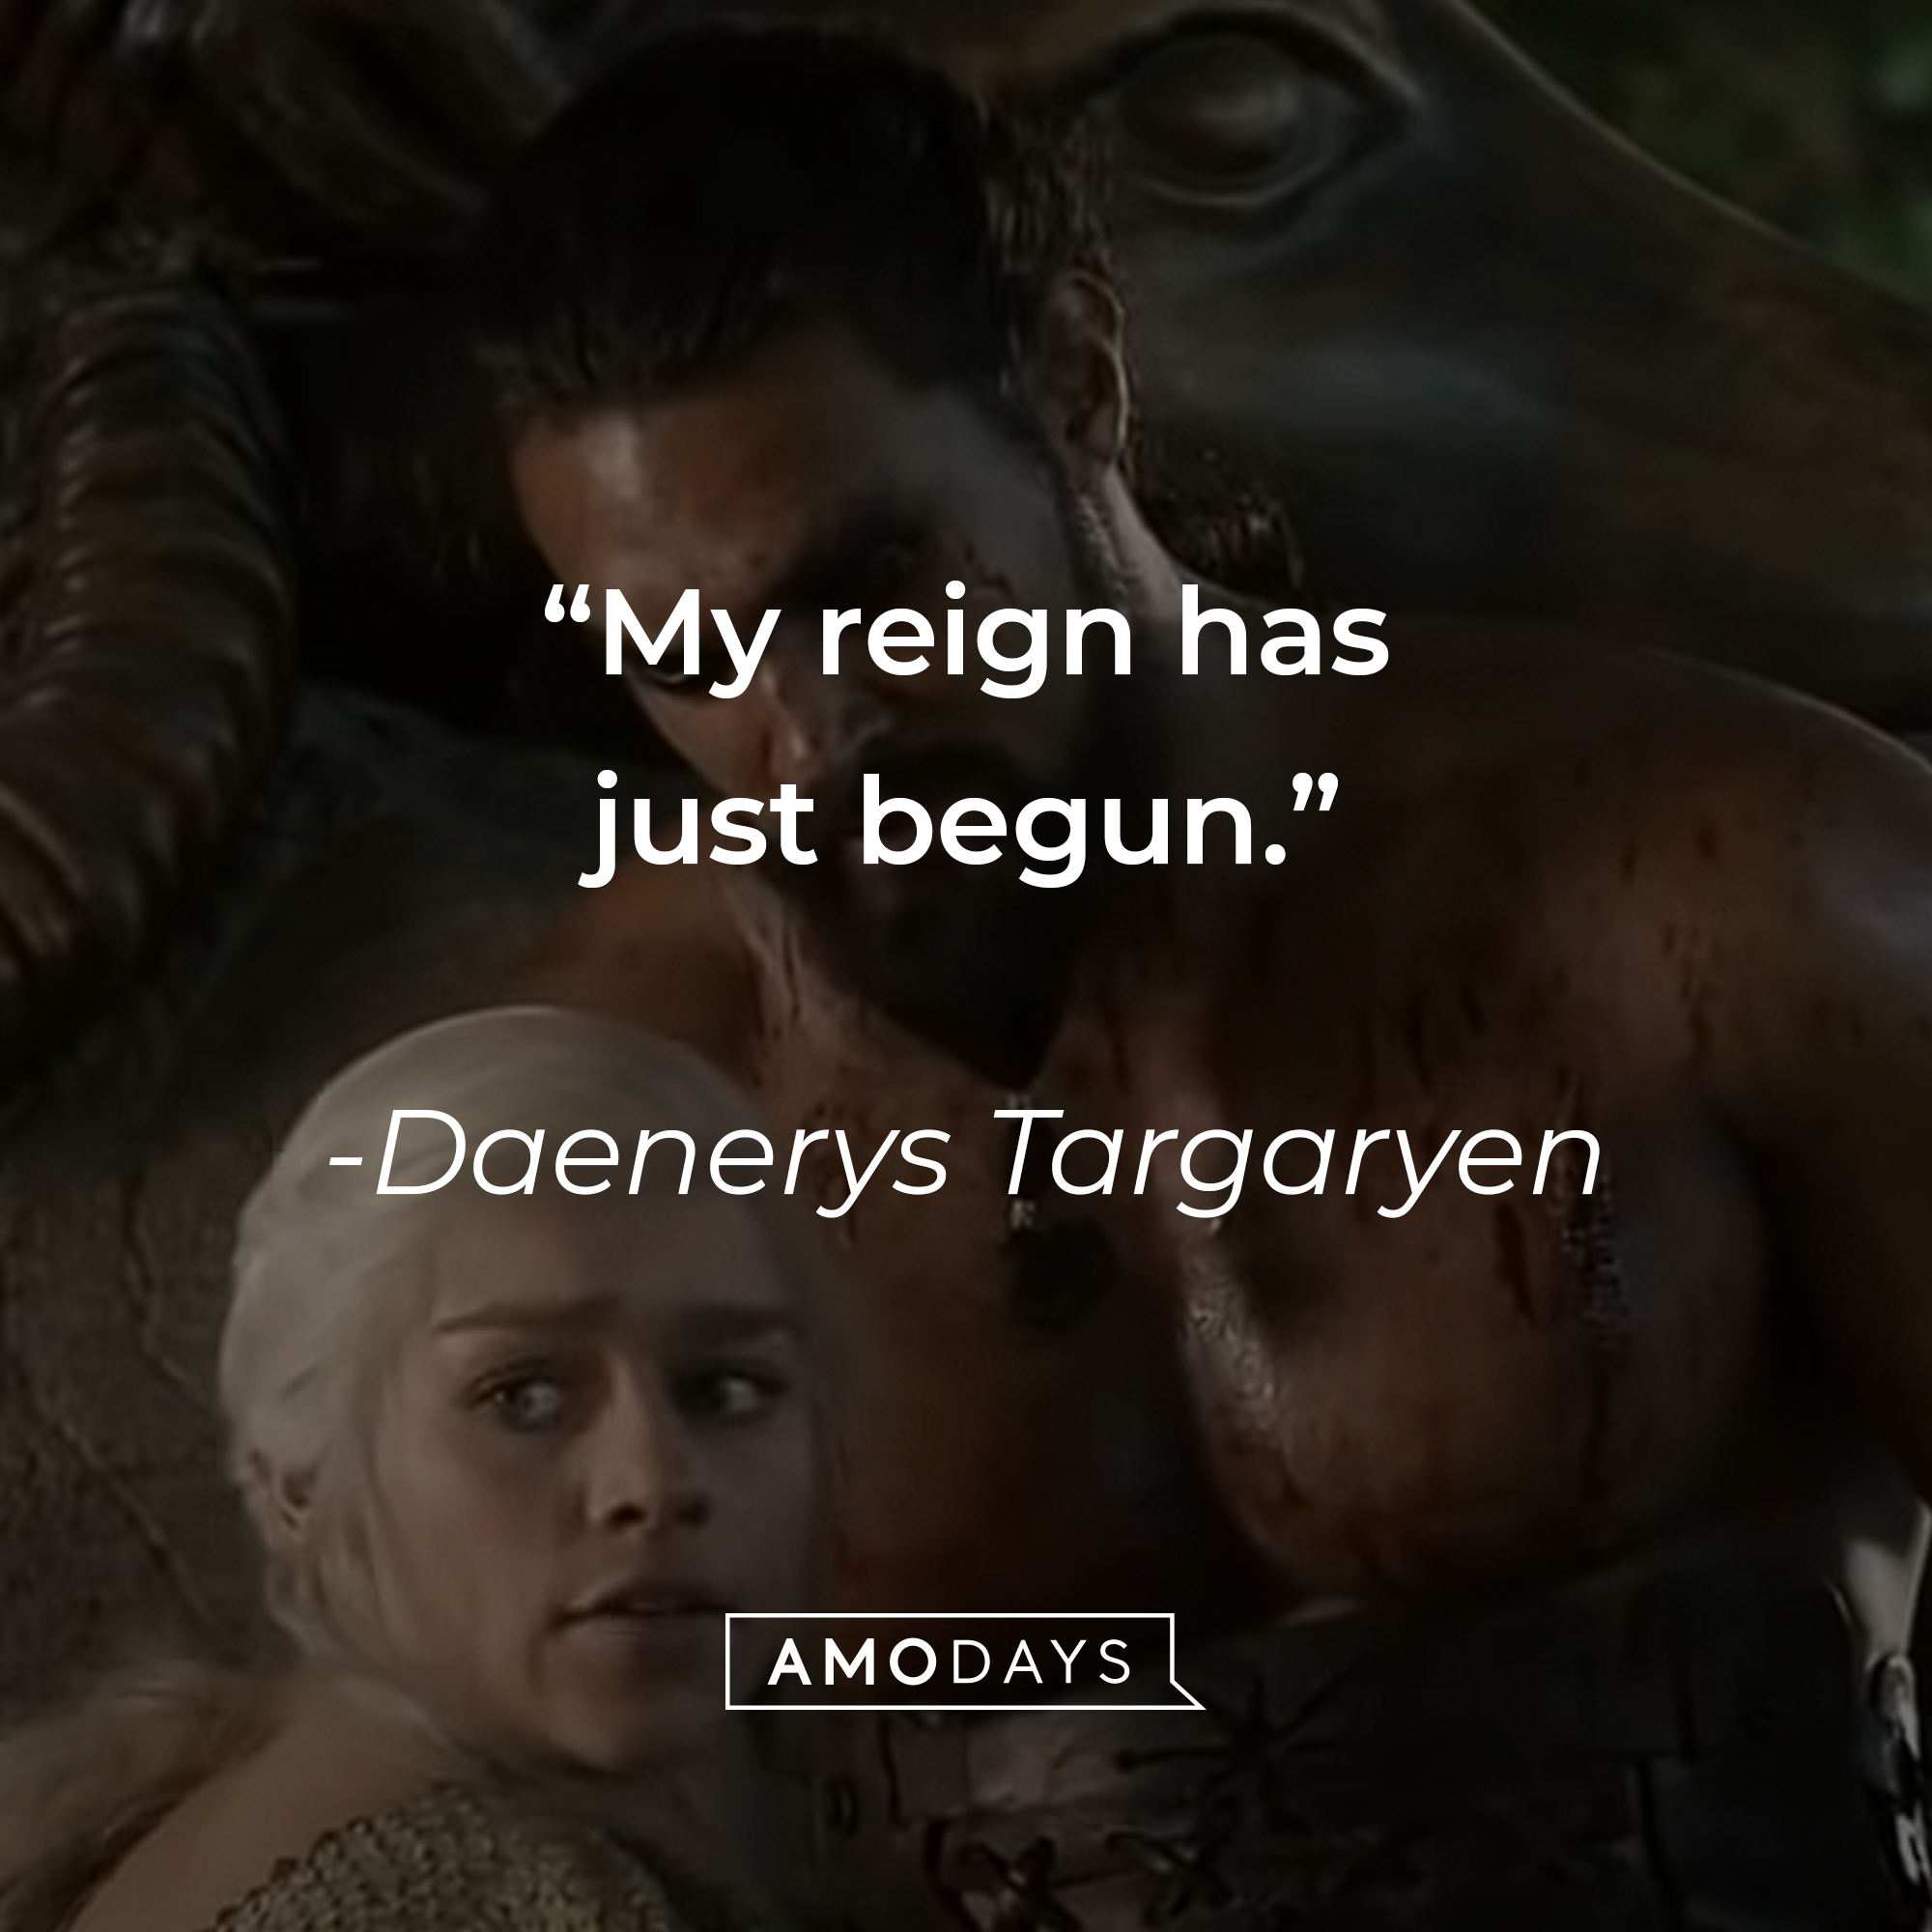 Daenerys Targaryen's quote: "My reign has just begun." | Source: youtube.com/gameofthrones